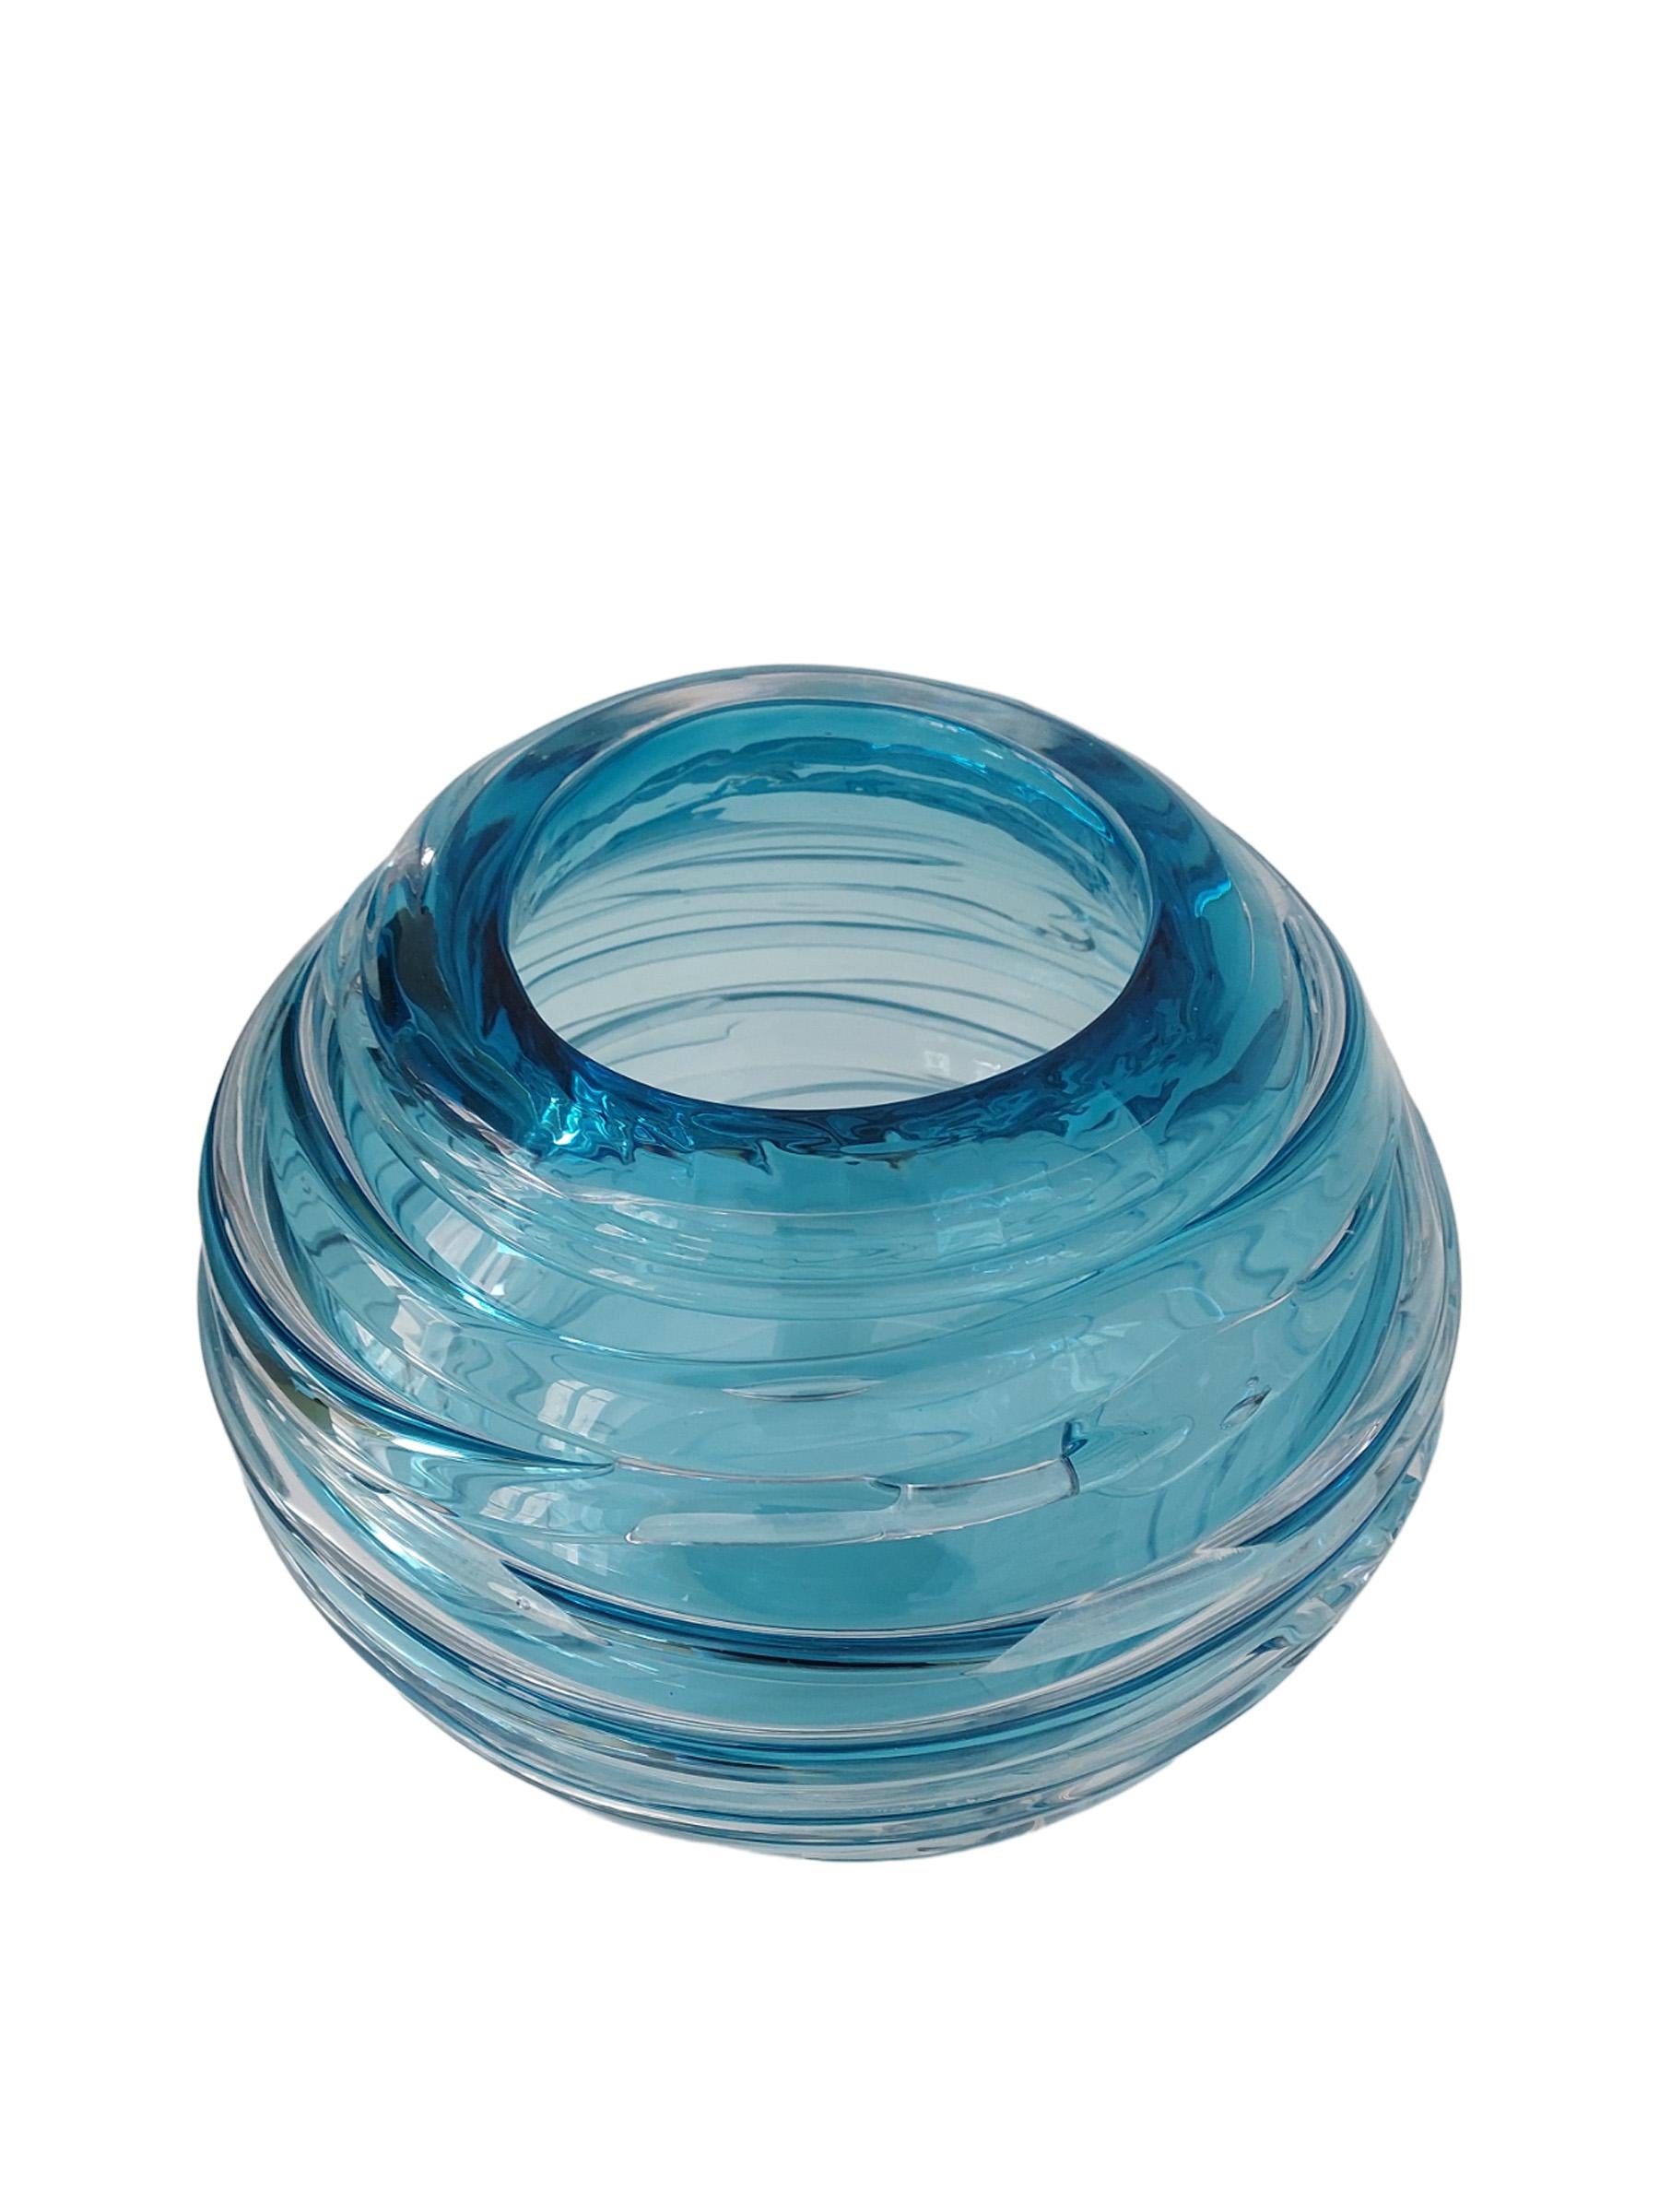 European Nature Inspired Unique Blue Color Free-Form Sculptural Vase For Sale